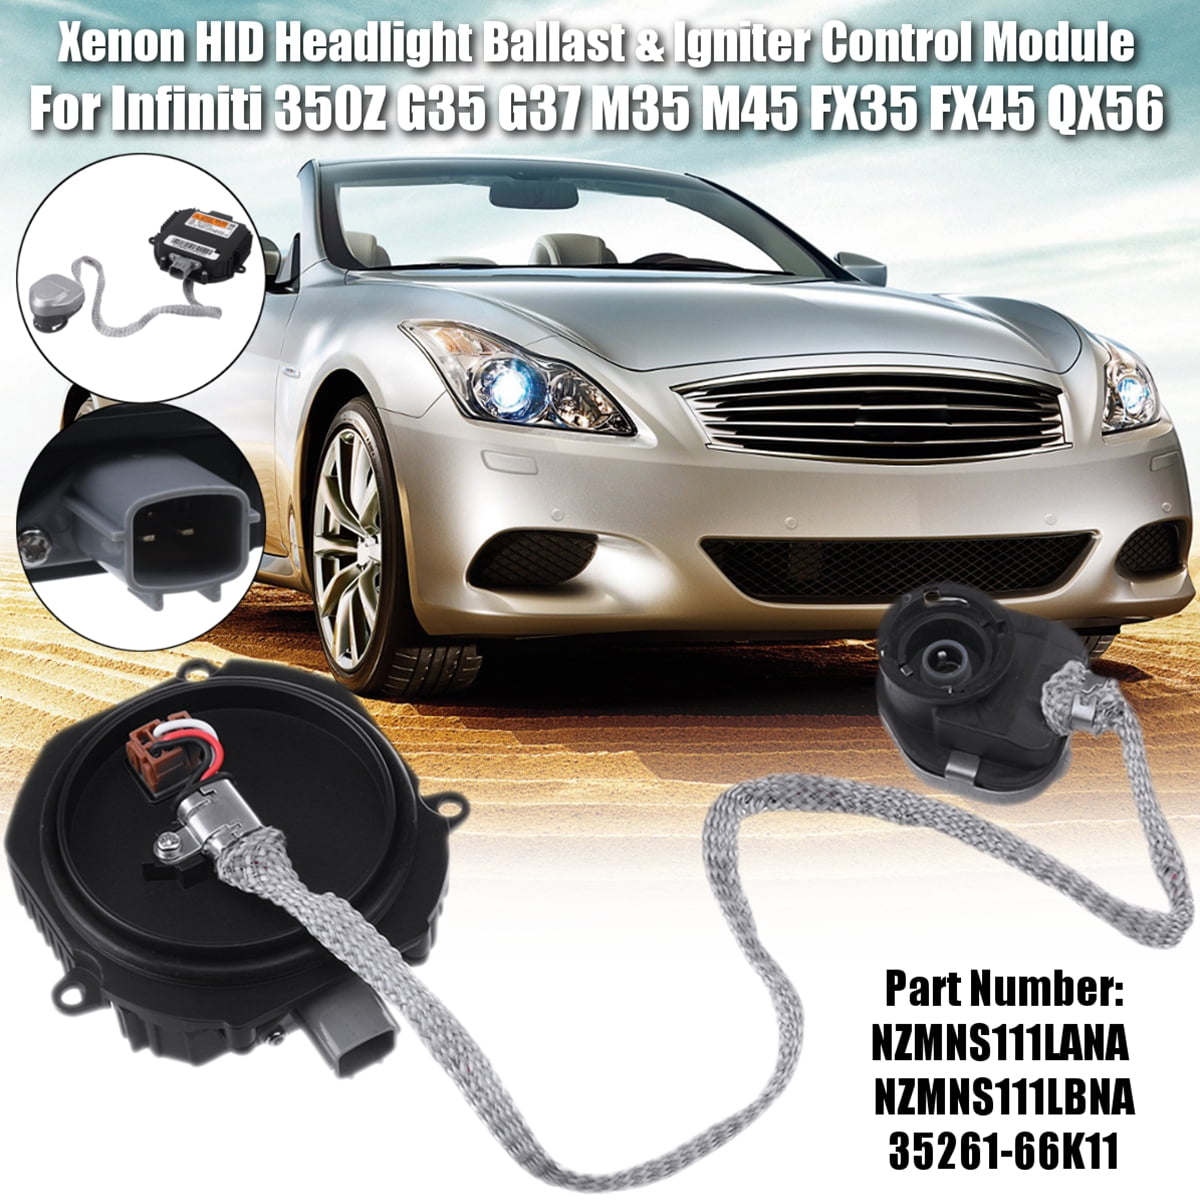 35261-66k11 Xenon Headlight HID Ballast For Infiniti G37 EX35 FX35 QX56 